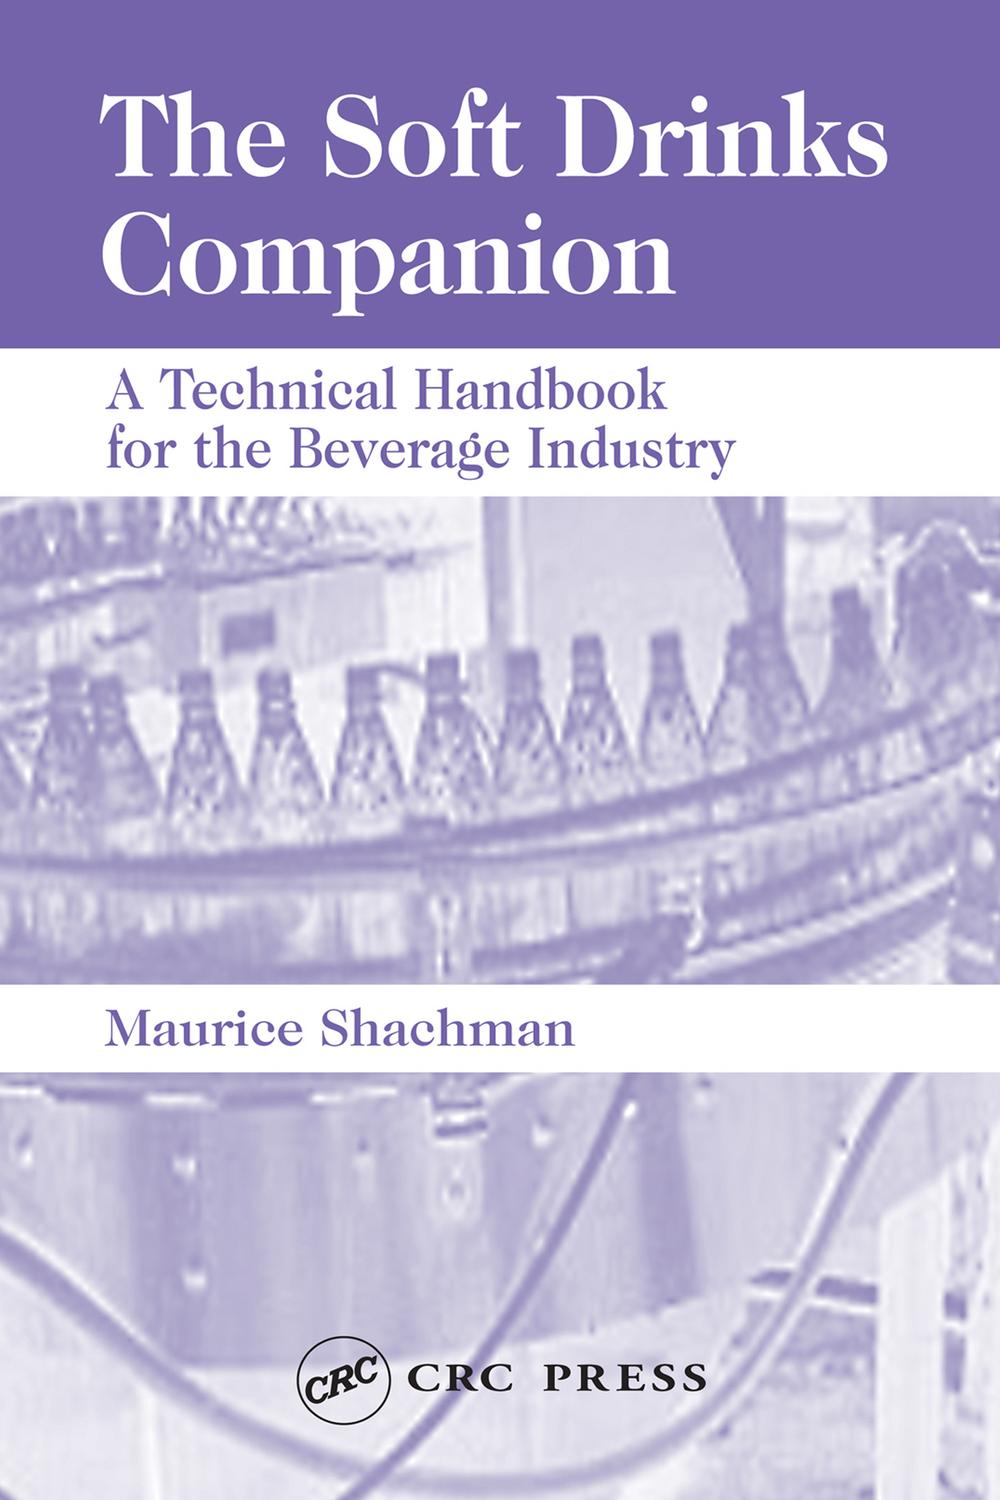 PDF] The Soft Drinks Companion by Maurice Shachman eBook | Perlego